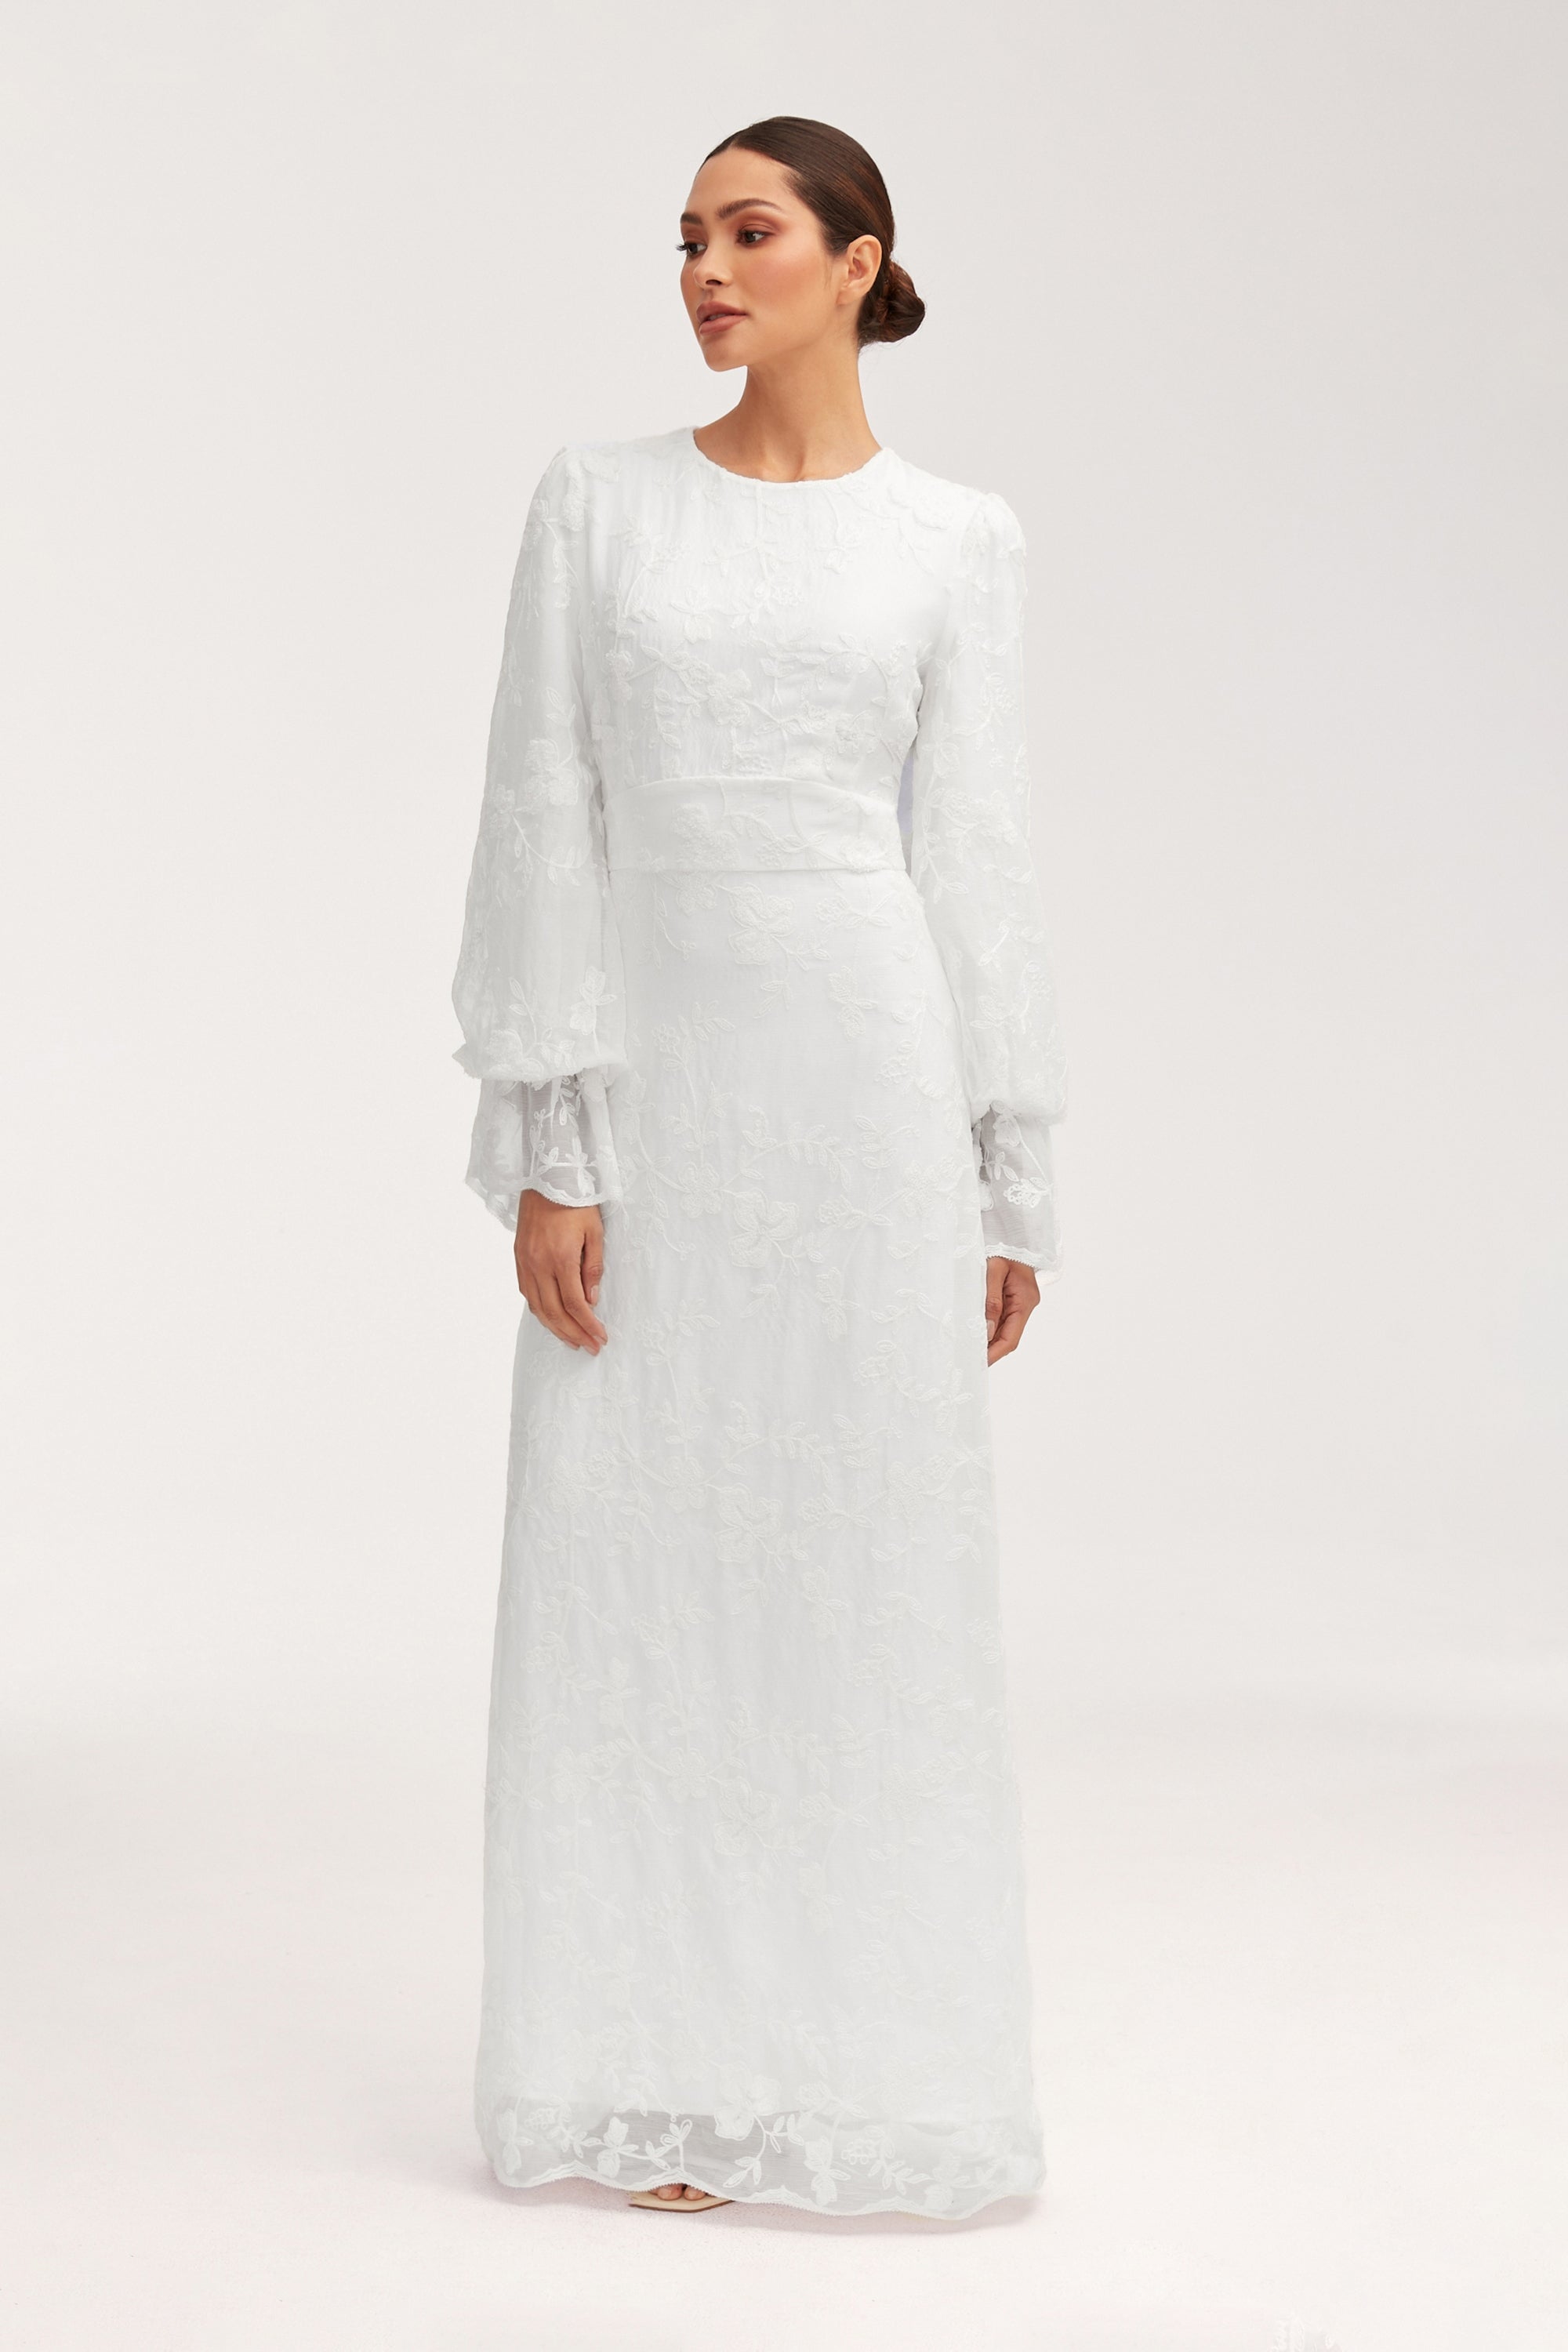 Romaissa White Lace Maxi Dress Clothing epschoolboard 